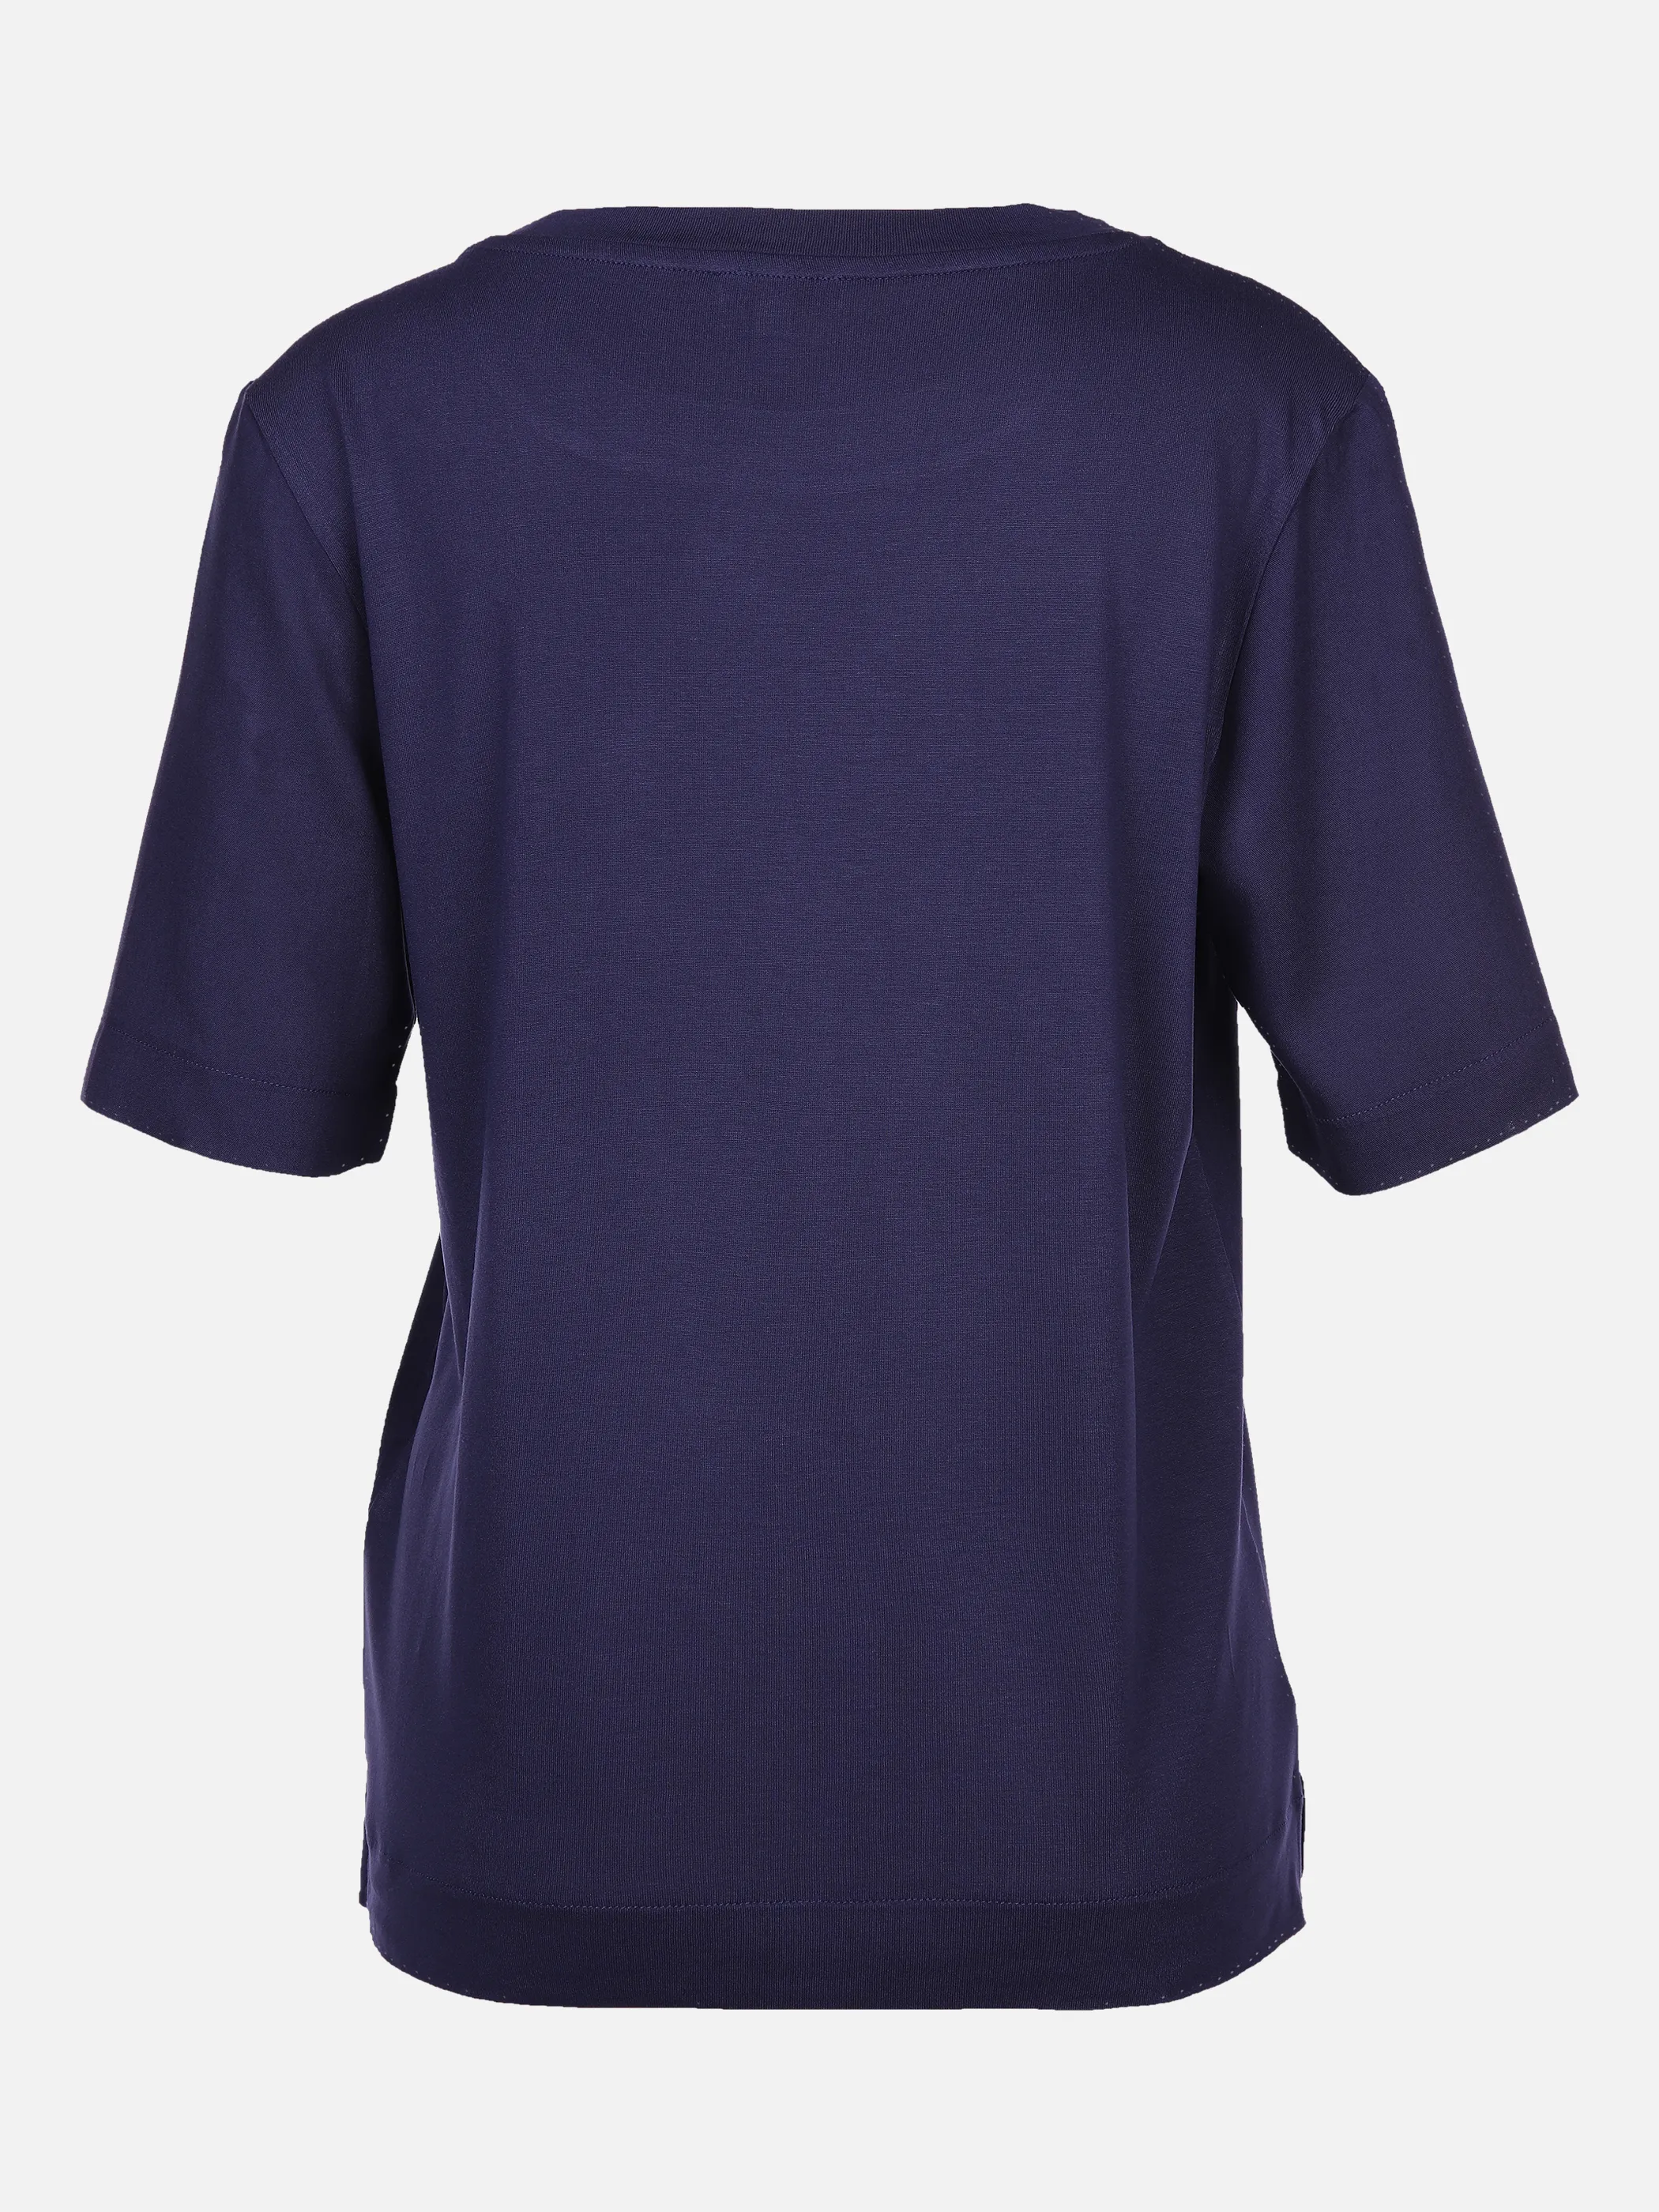 Tom Tailor 1035460 T-shirt fabric mix wit Blau 874834 11331 2